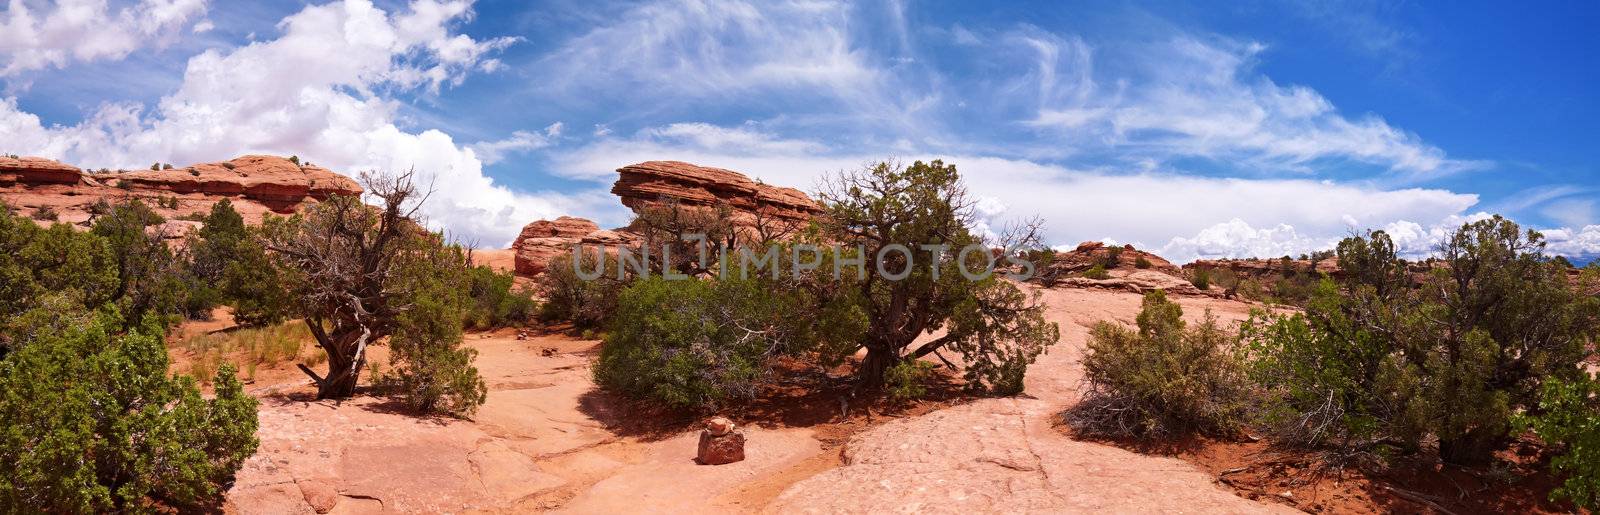 Desert panorama by LoonChild